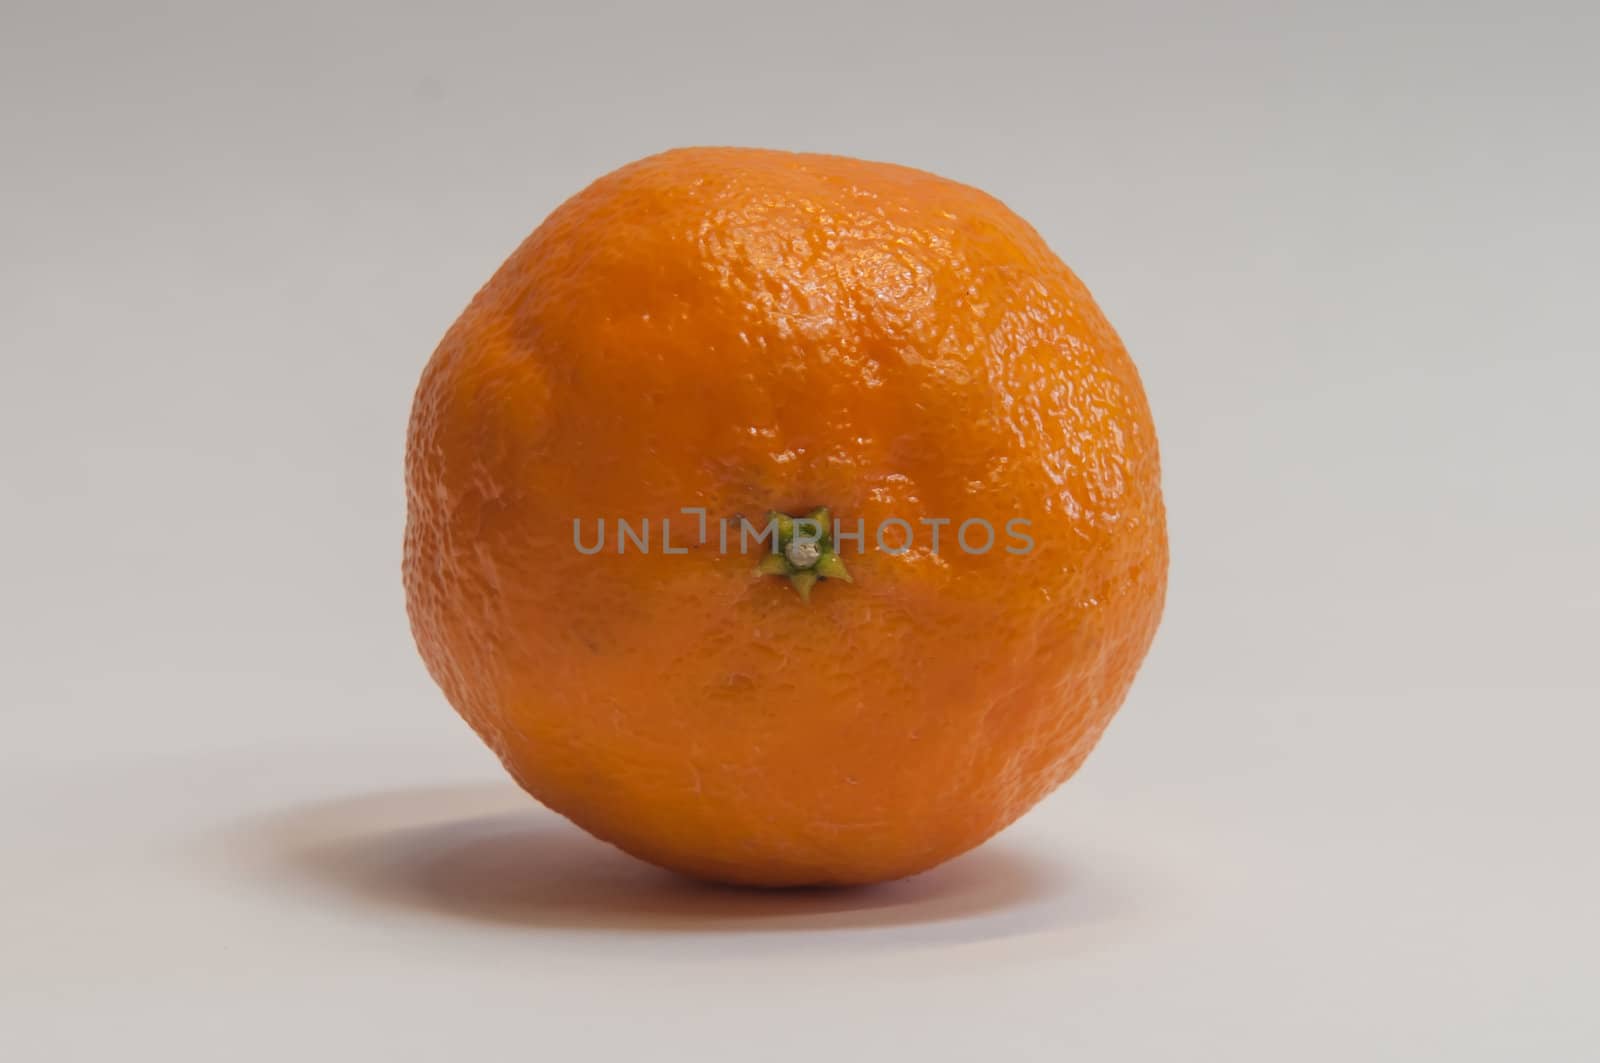 clementine by digidreamgrafix